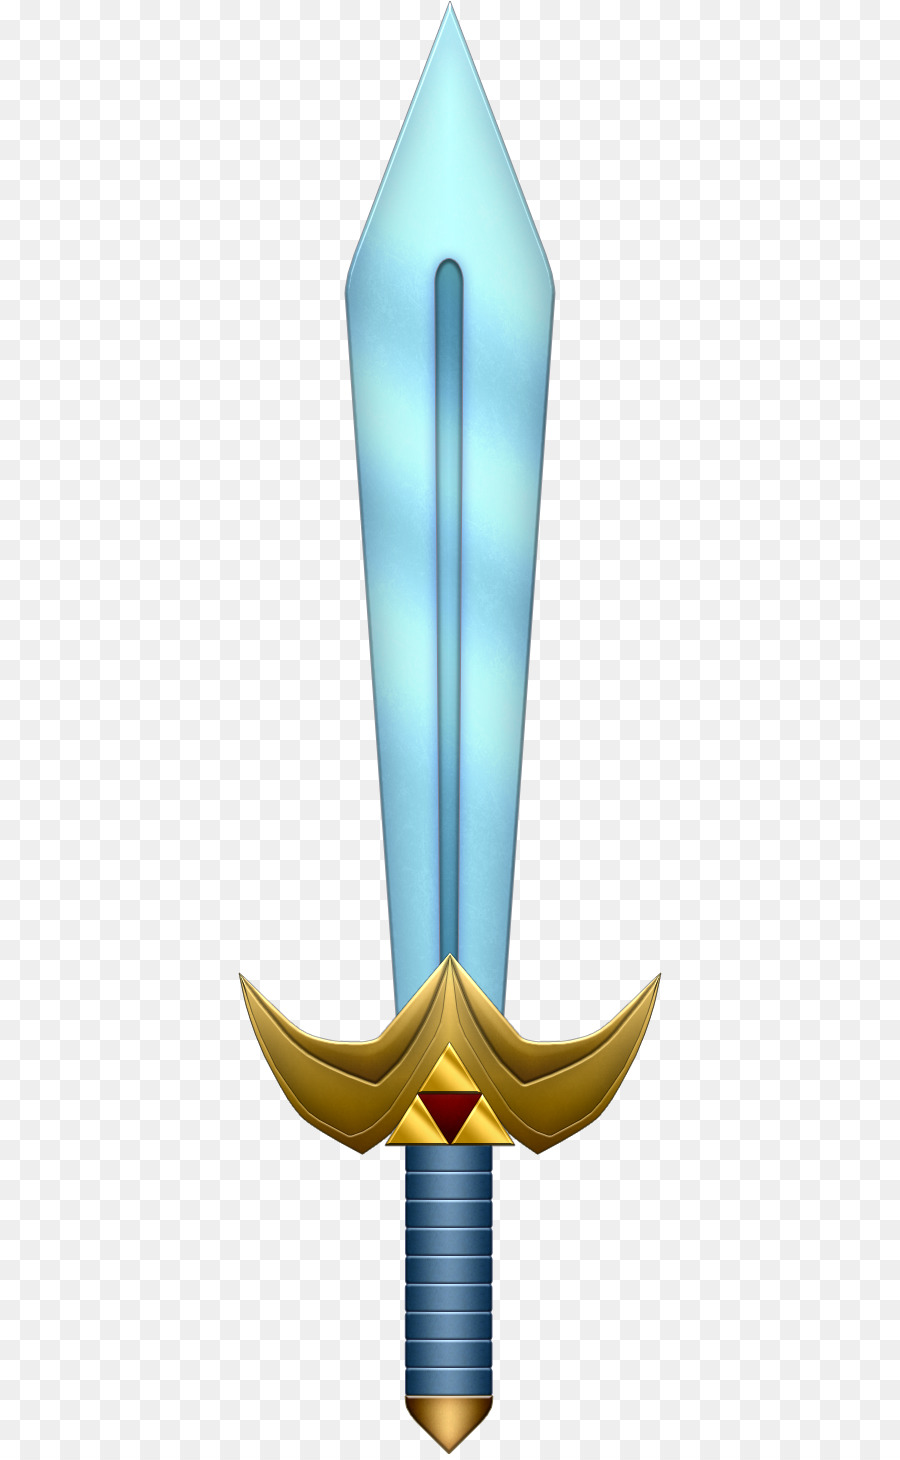 The Legend of Zelda: A Link to the Past and Four Swords Master Sword - zelda sword png download - 424*1455 - Free Transparent Legend Of Zelda A Link To The Past png Download.